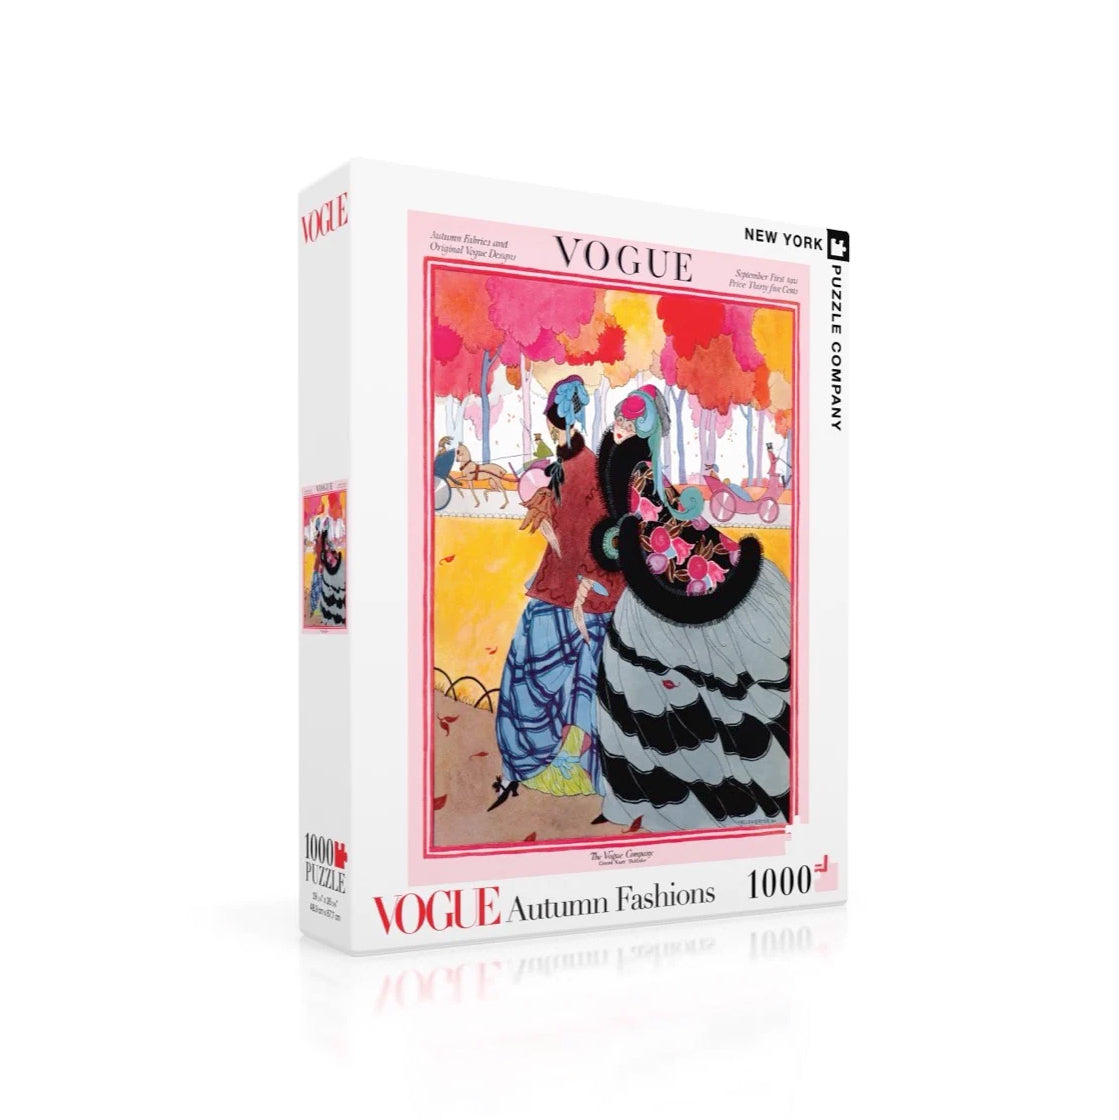 Puzzel Vogue Autumn Fashions│New York Puzzle Company 1000 stukjes│art. NPZVG1710│verpakking met schaduw